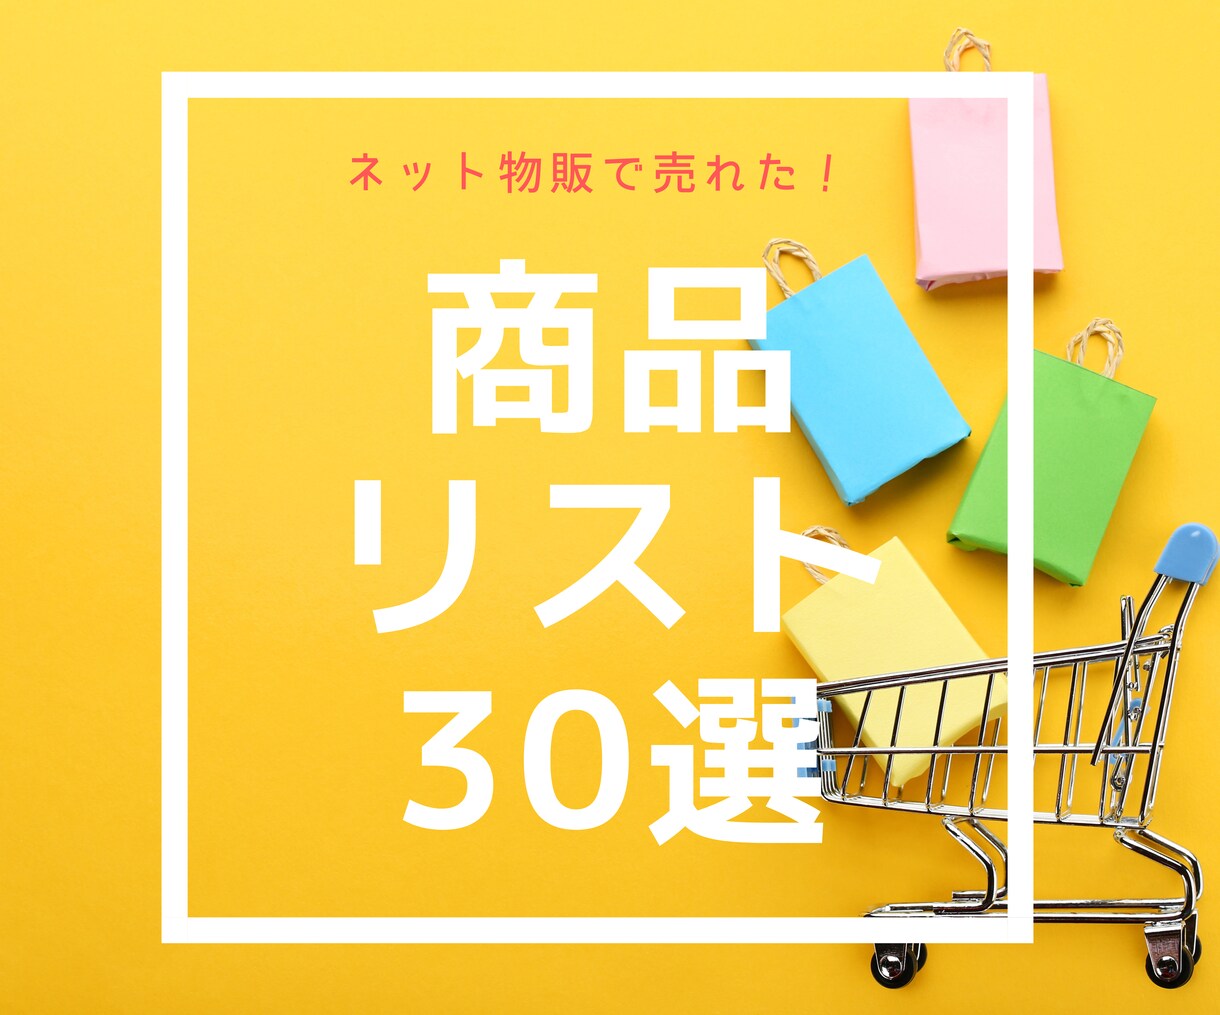 💬Coconara｜We provide a list of 30 items sold at overseas sales Suuuuzu43 5.0 …